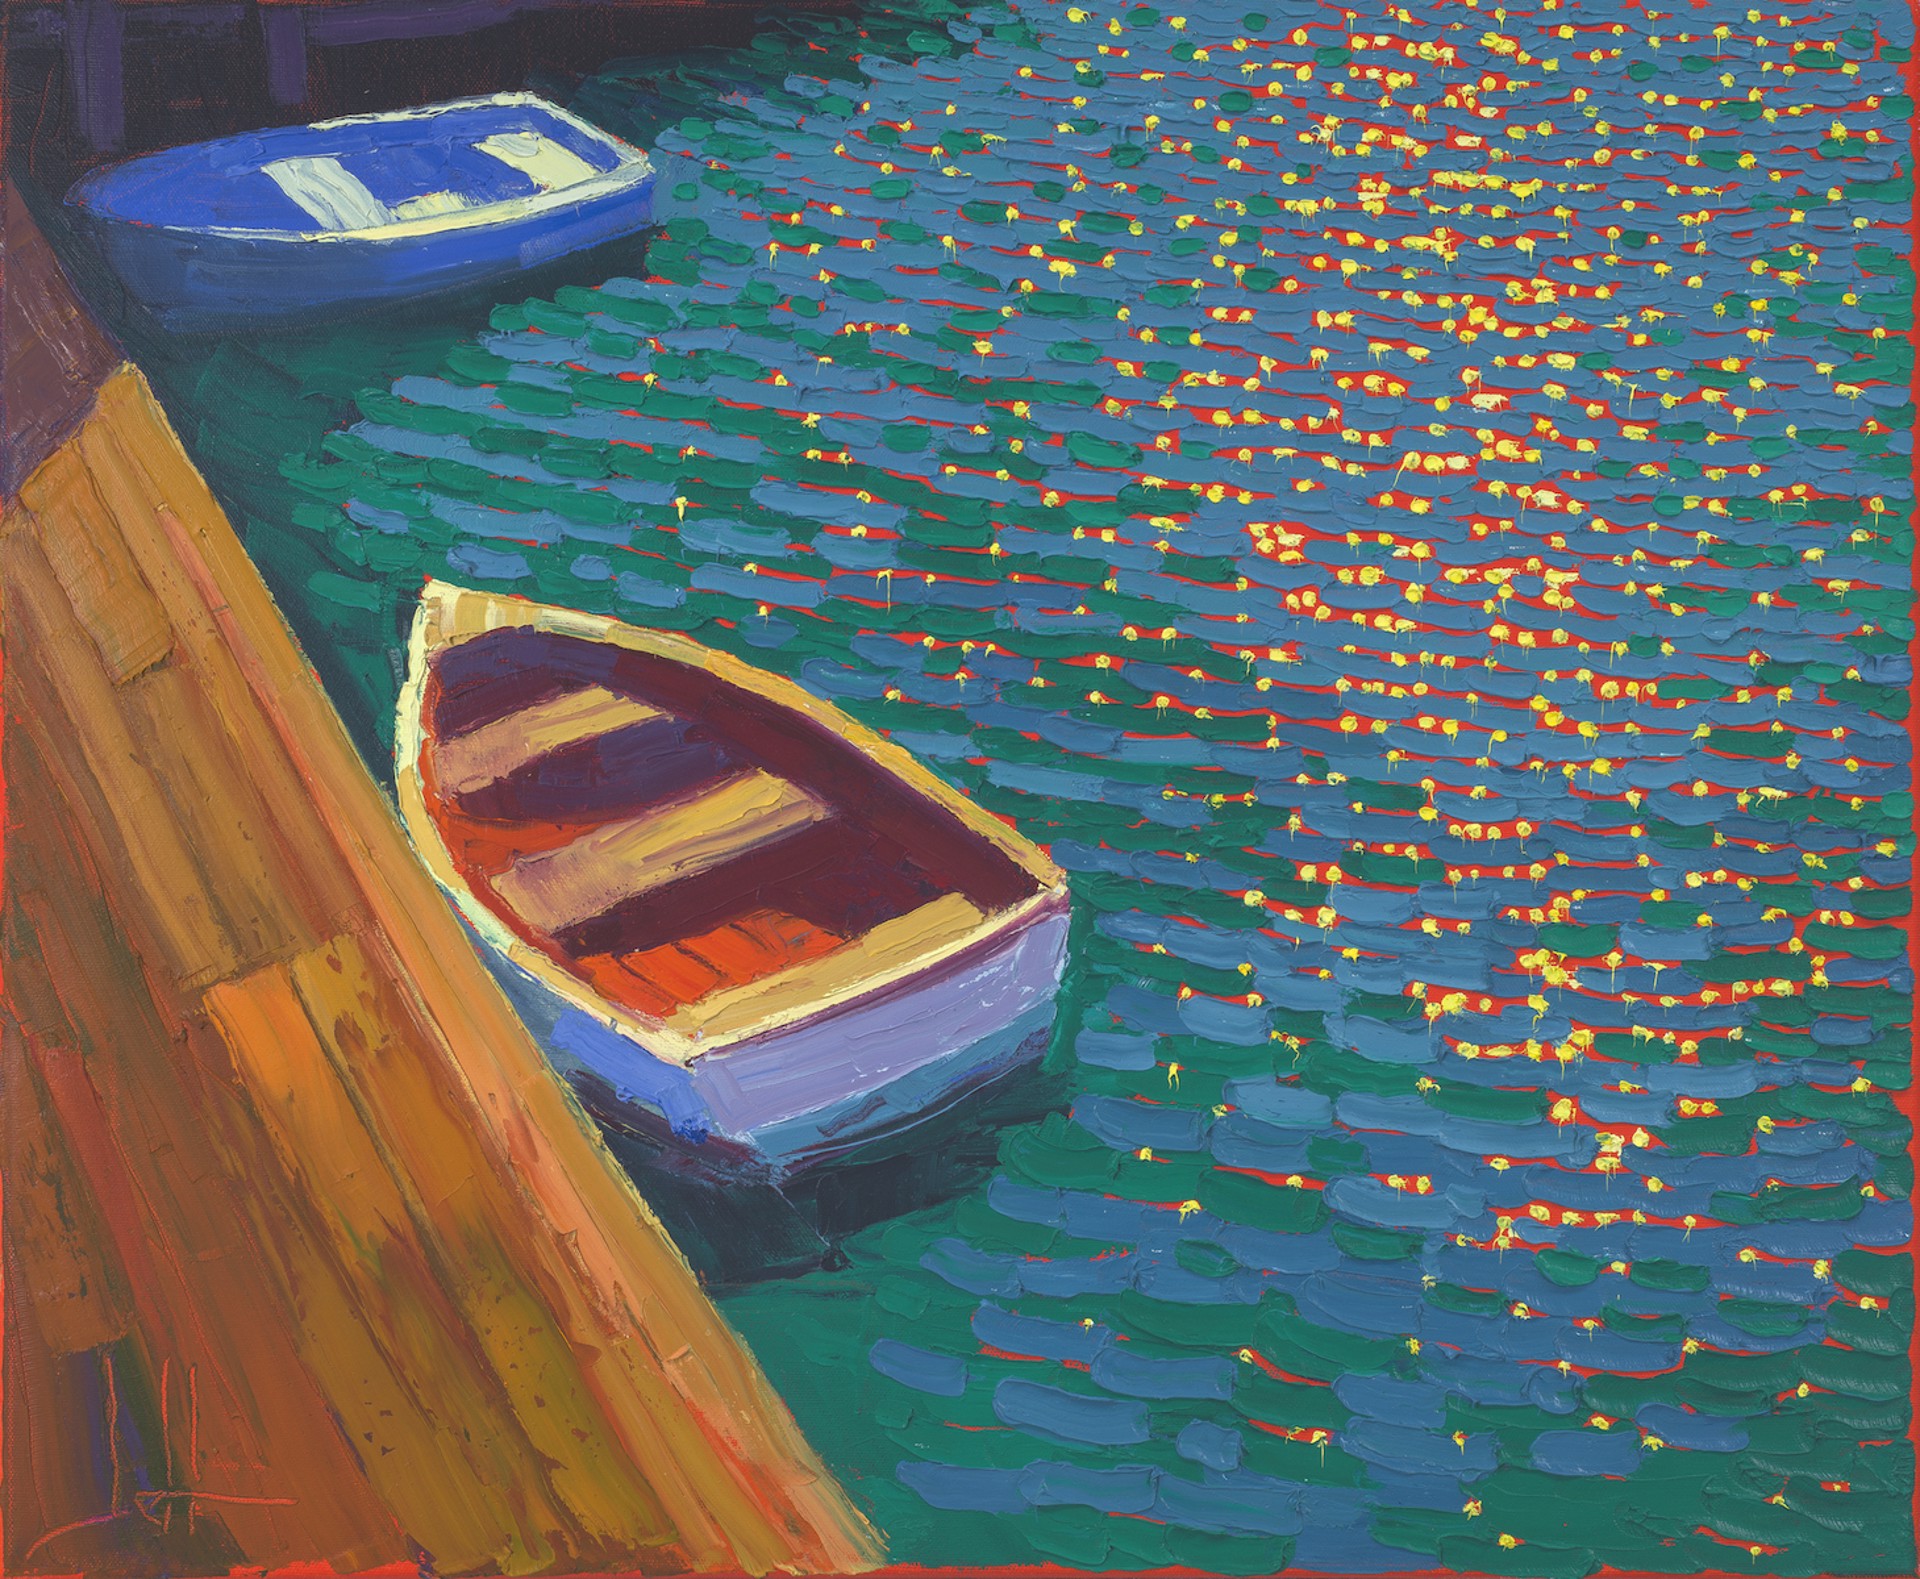 Sun Boats by Jeff Daniel Smith